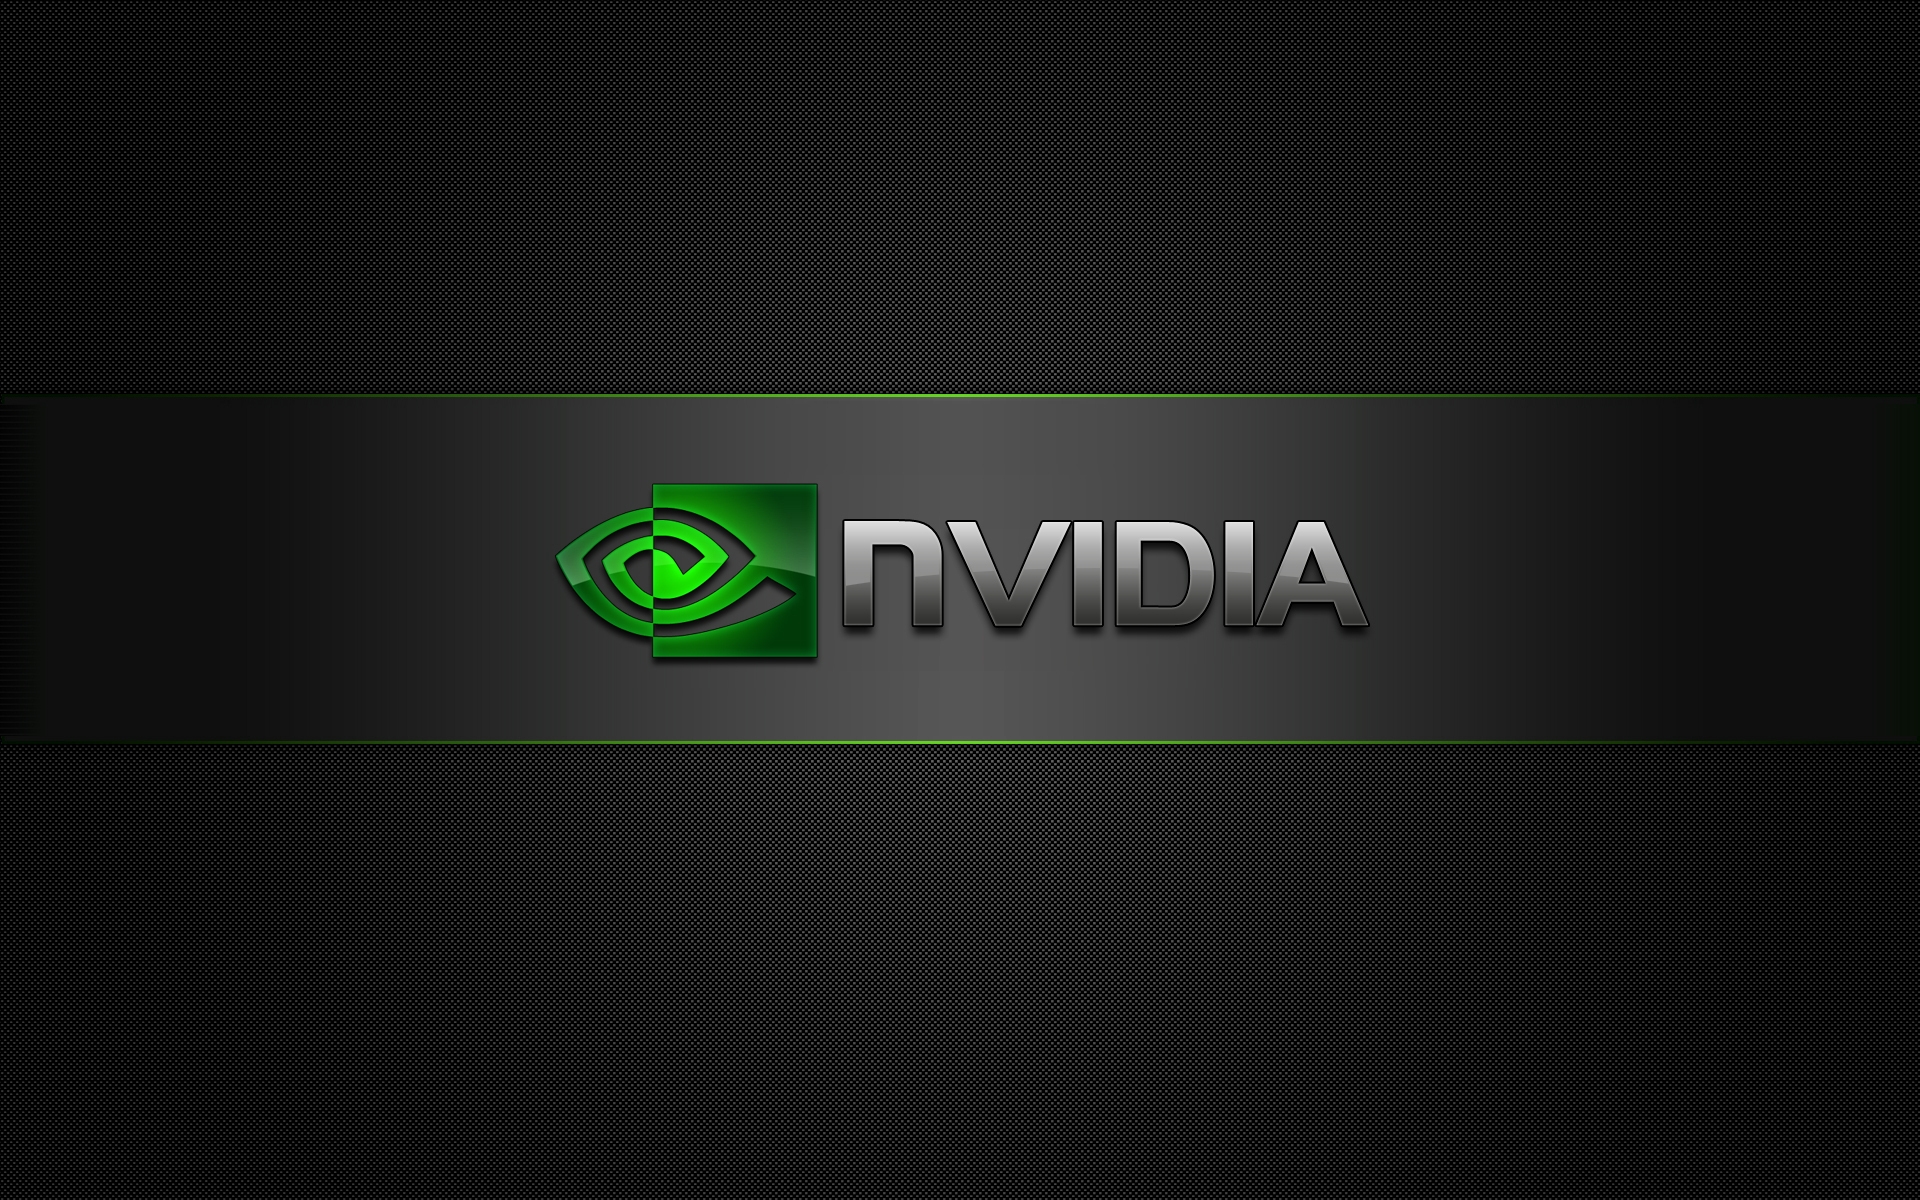 Nvidia Minimalistic for 1920 x 1200 widescreen resolution